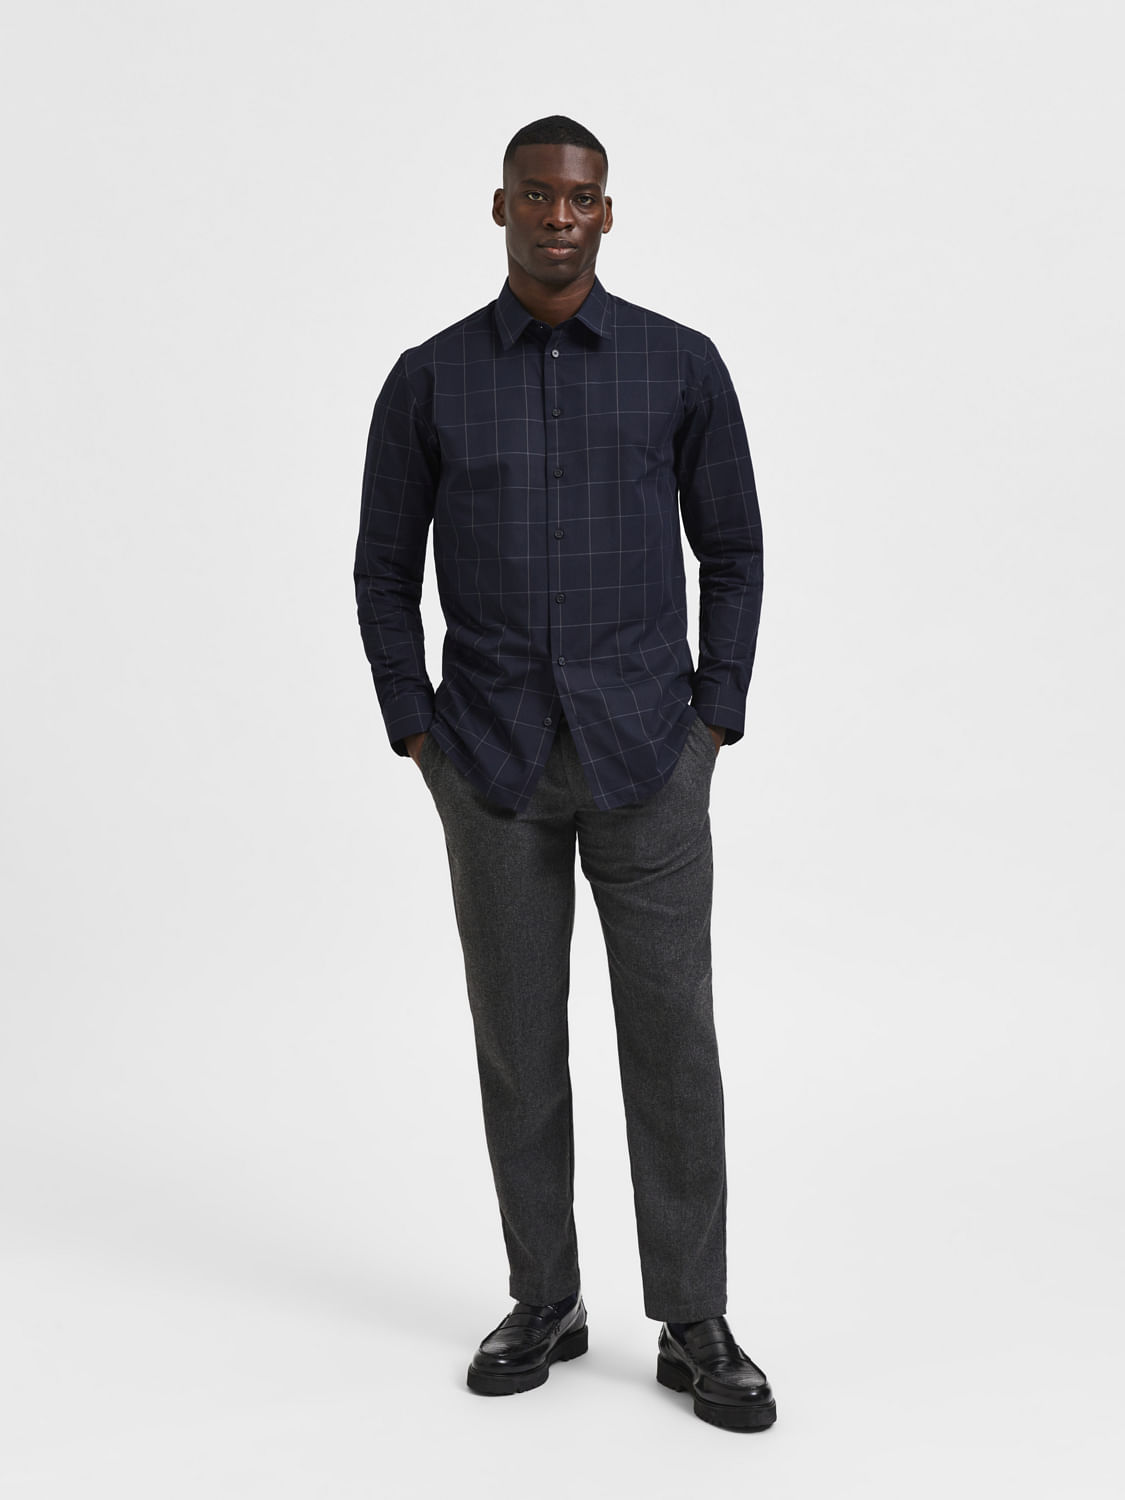 100% Cotton Sky Blue SLIM FIT Full Sleeve Formal Mens Plain Shirt